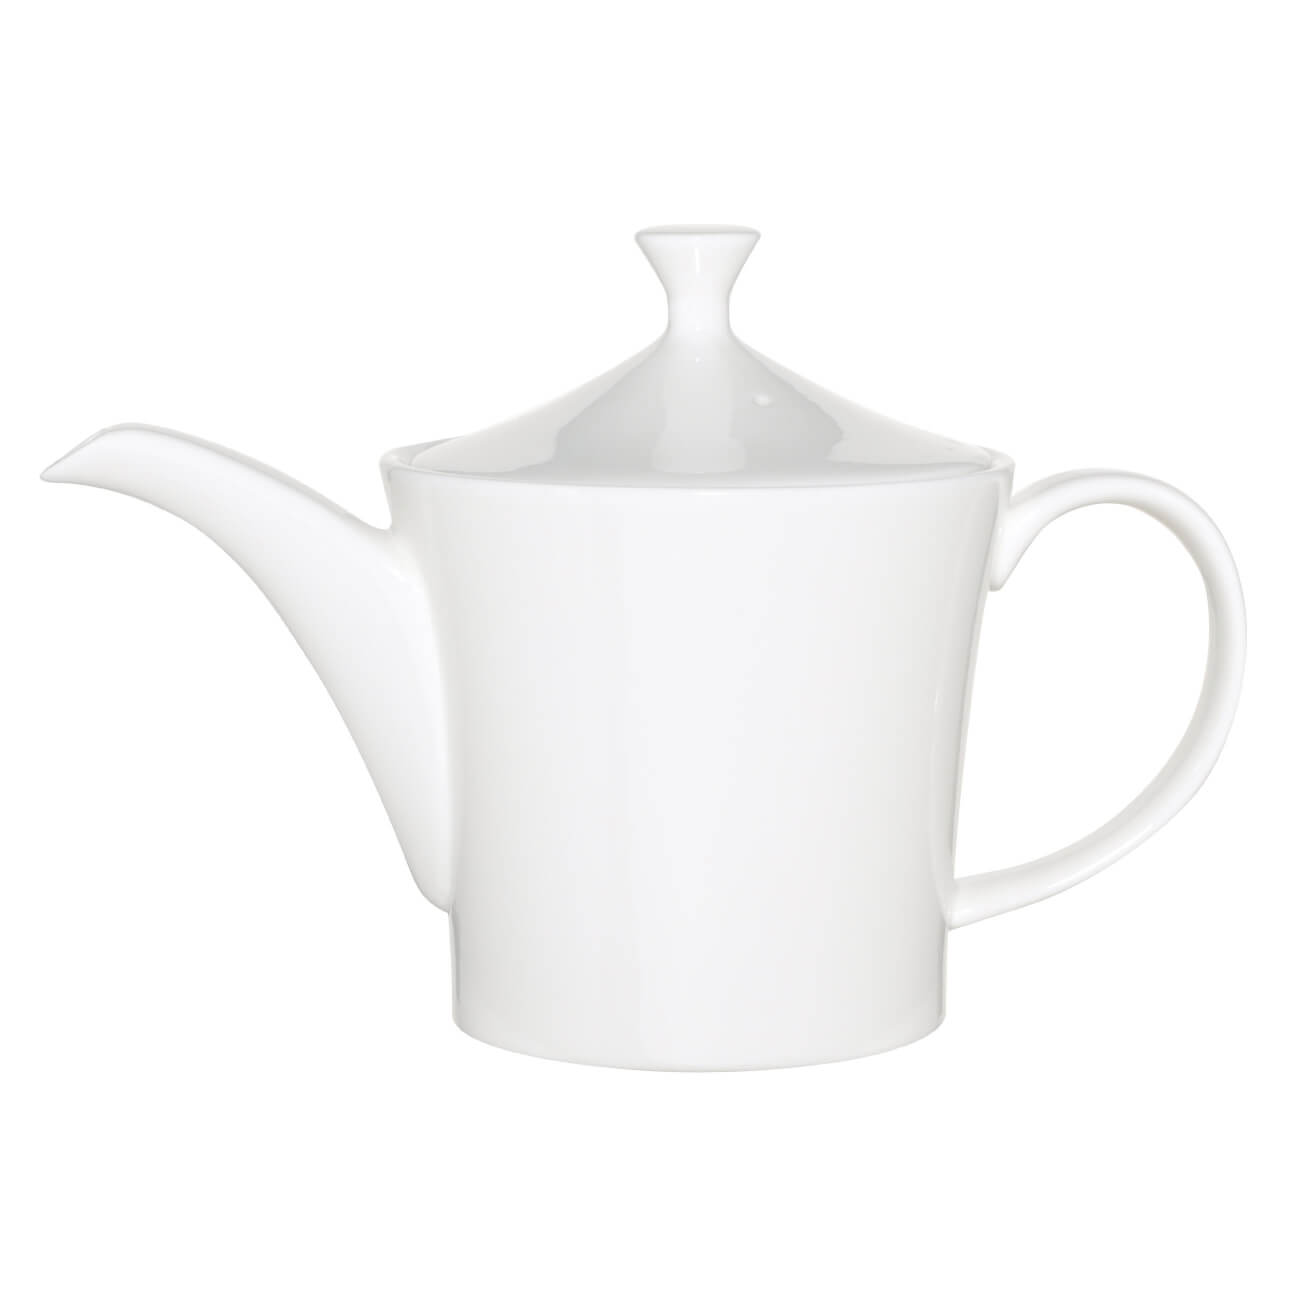 Чайник заварочный, 800 мл, фарфор F, белый, Ideal white чайник заварочный с чашками smart solutions 1 2л